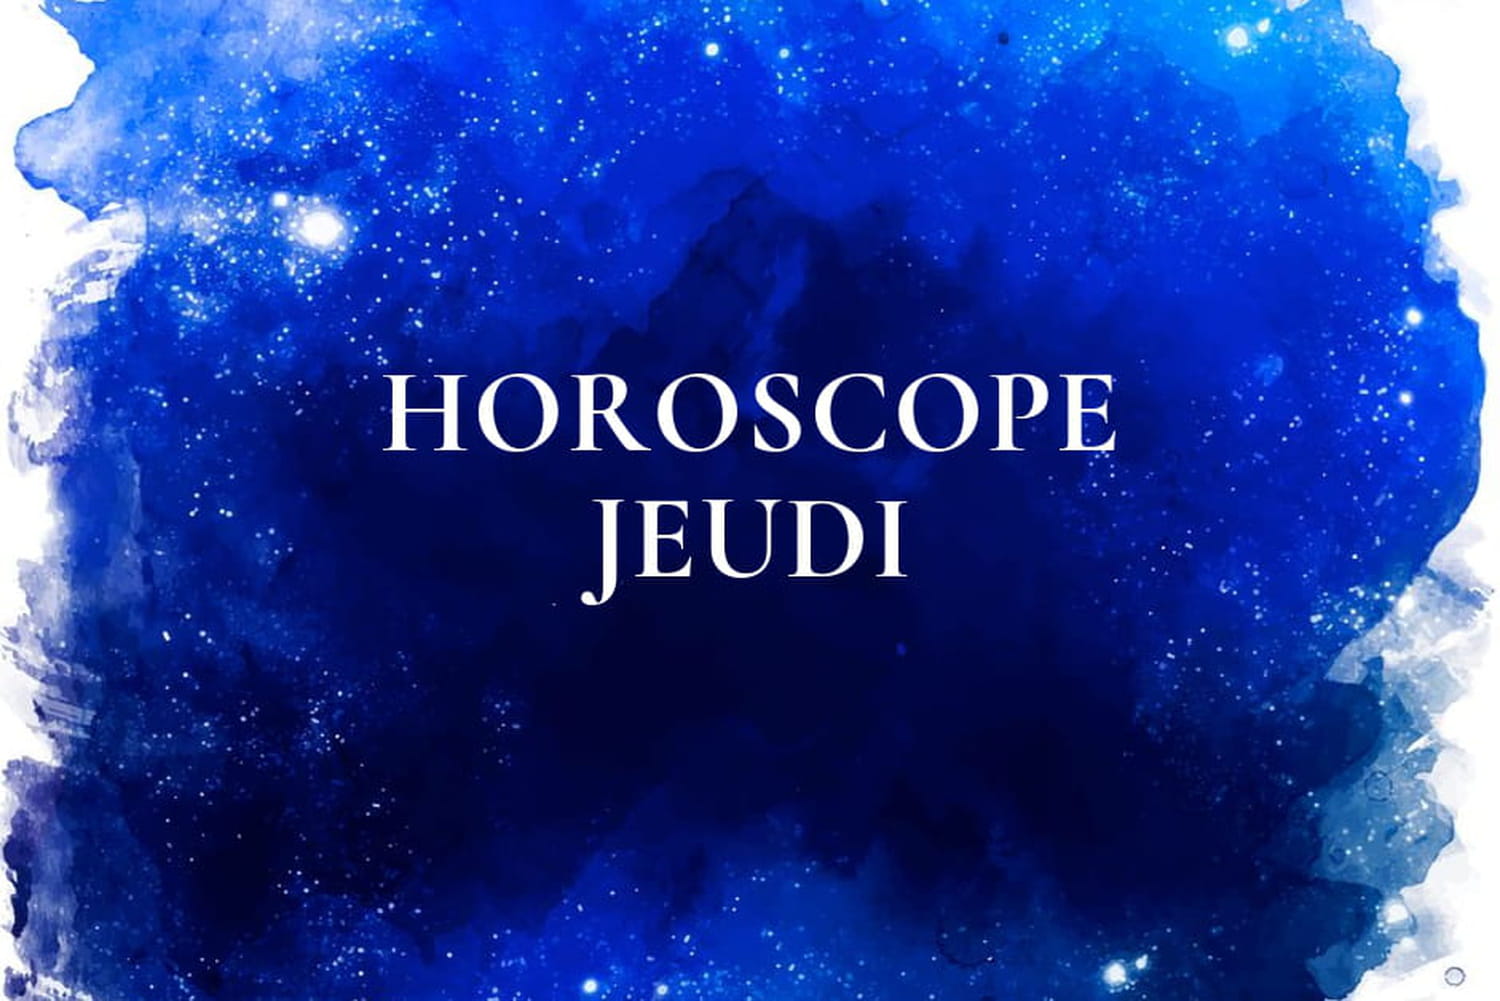 Horoscope du jeudi 8 juillet